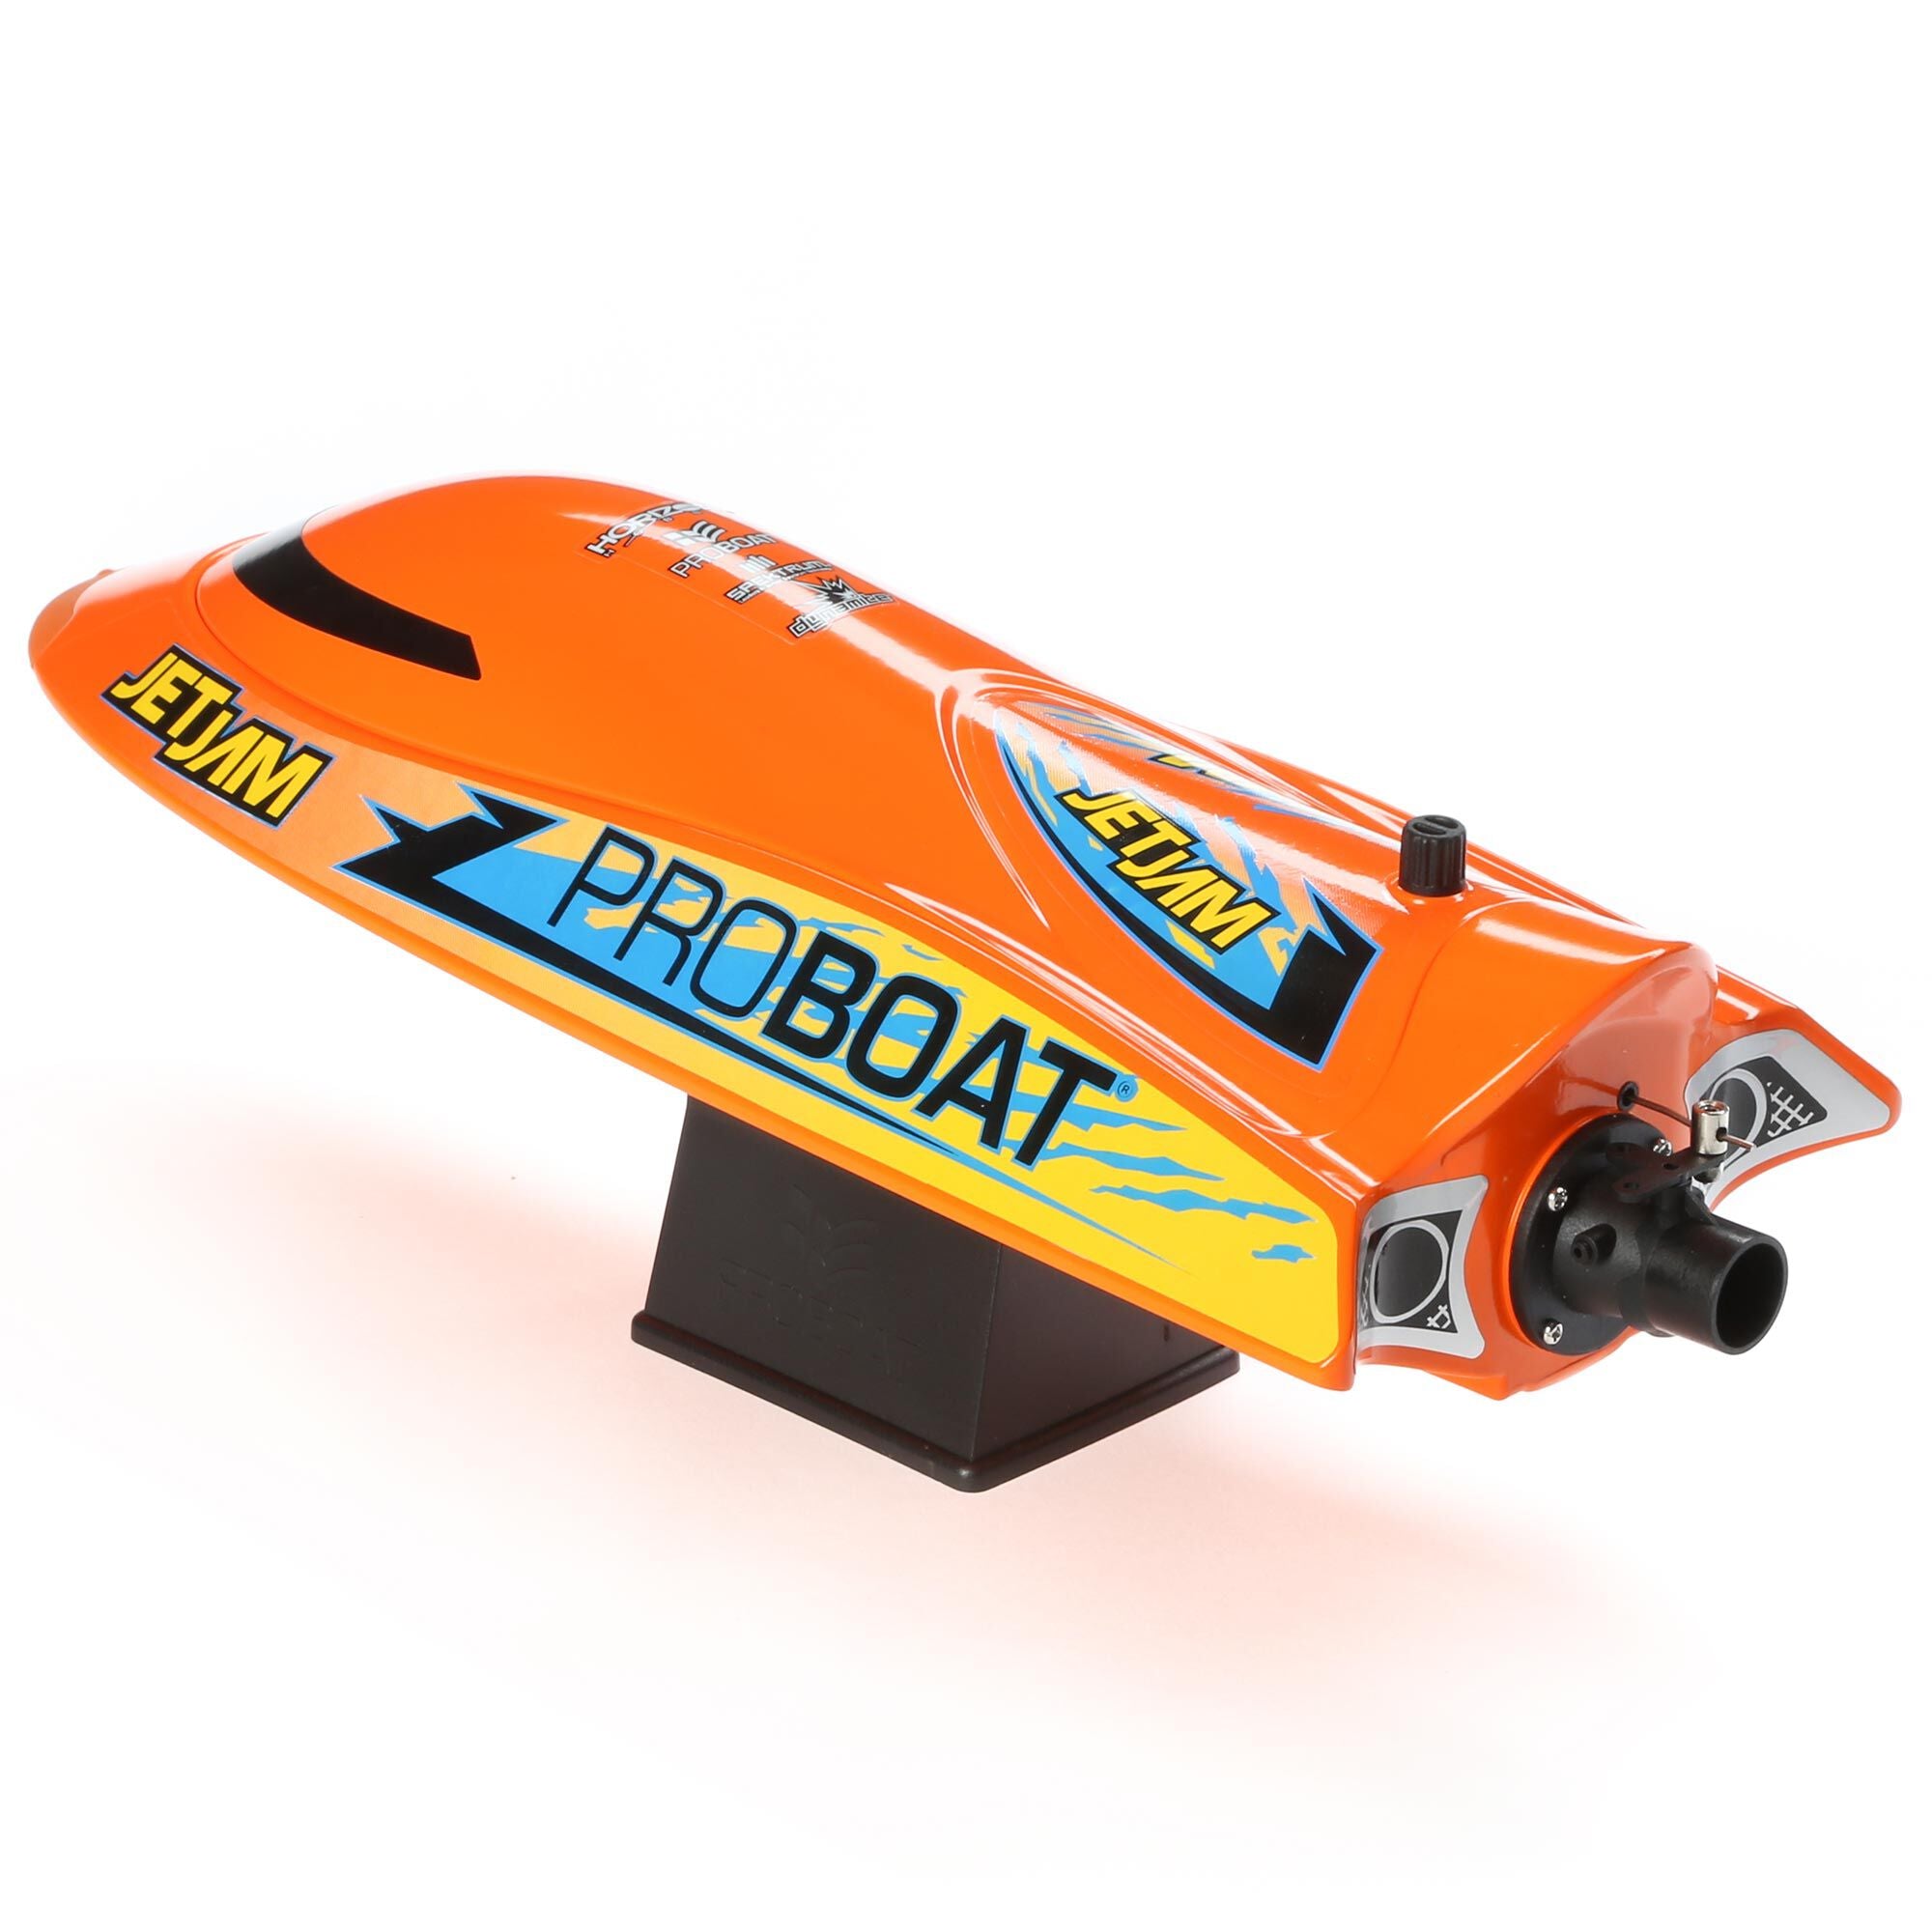 Pro Boat Jet Jam V2 12" Self-Righting Pool Racer Brushed RTR (Assorted Colors)